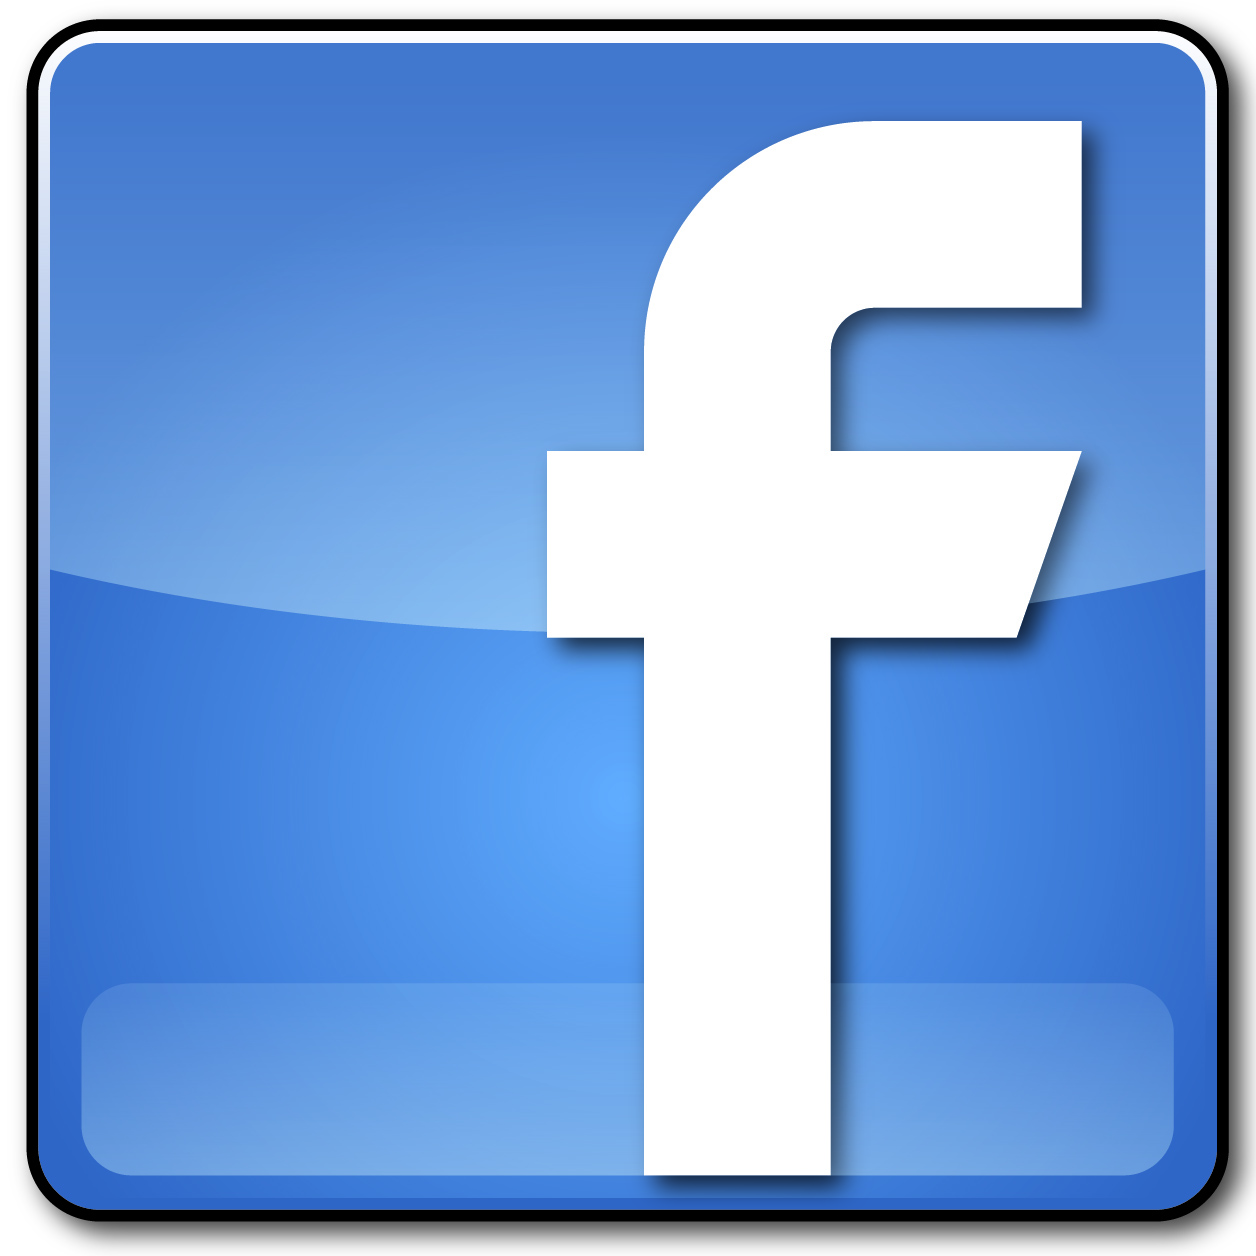 Facebook Logo Download - ClipArt Best